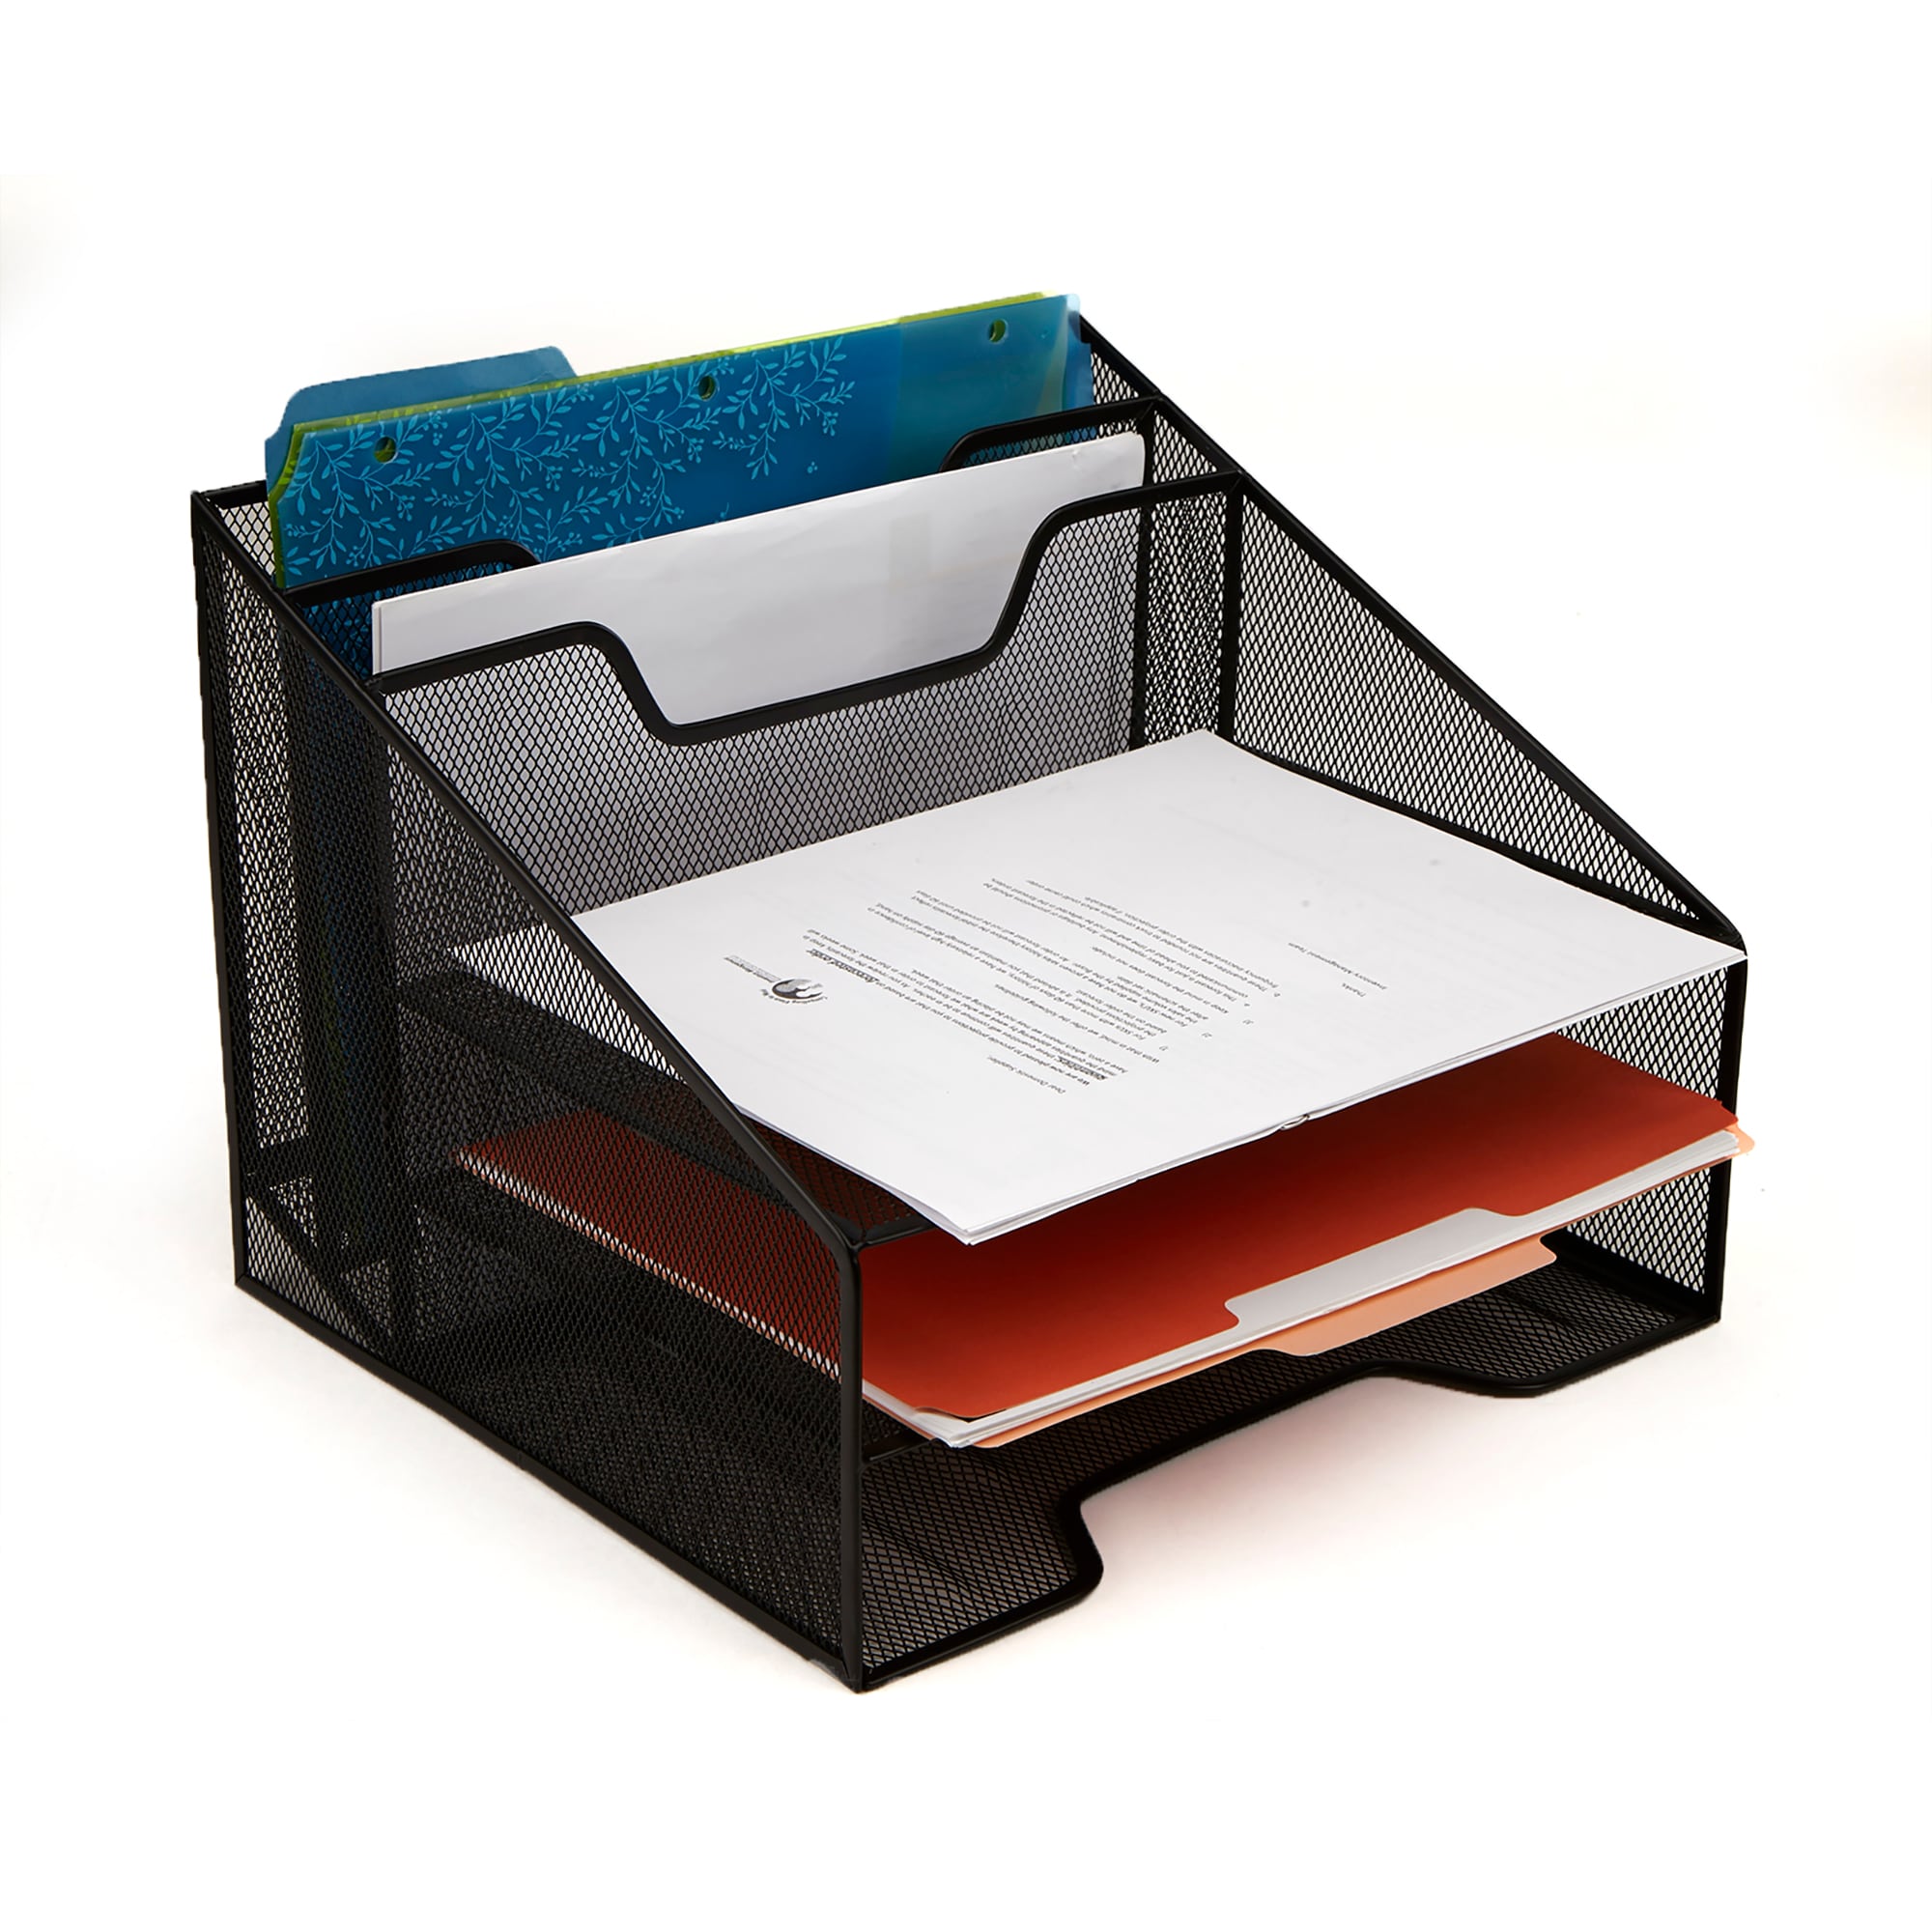 Desk File Organizer Paper Sorter for Letter/A4 Size Folders Documents Mesh Made Black Samstar 4 Tier Stackable Letter Paper Tray 